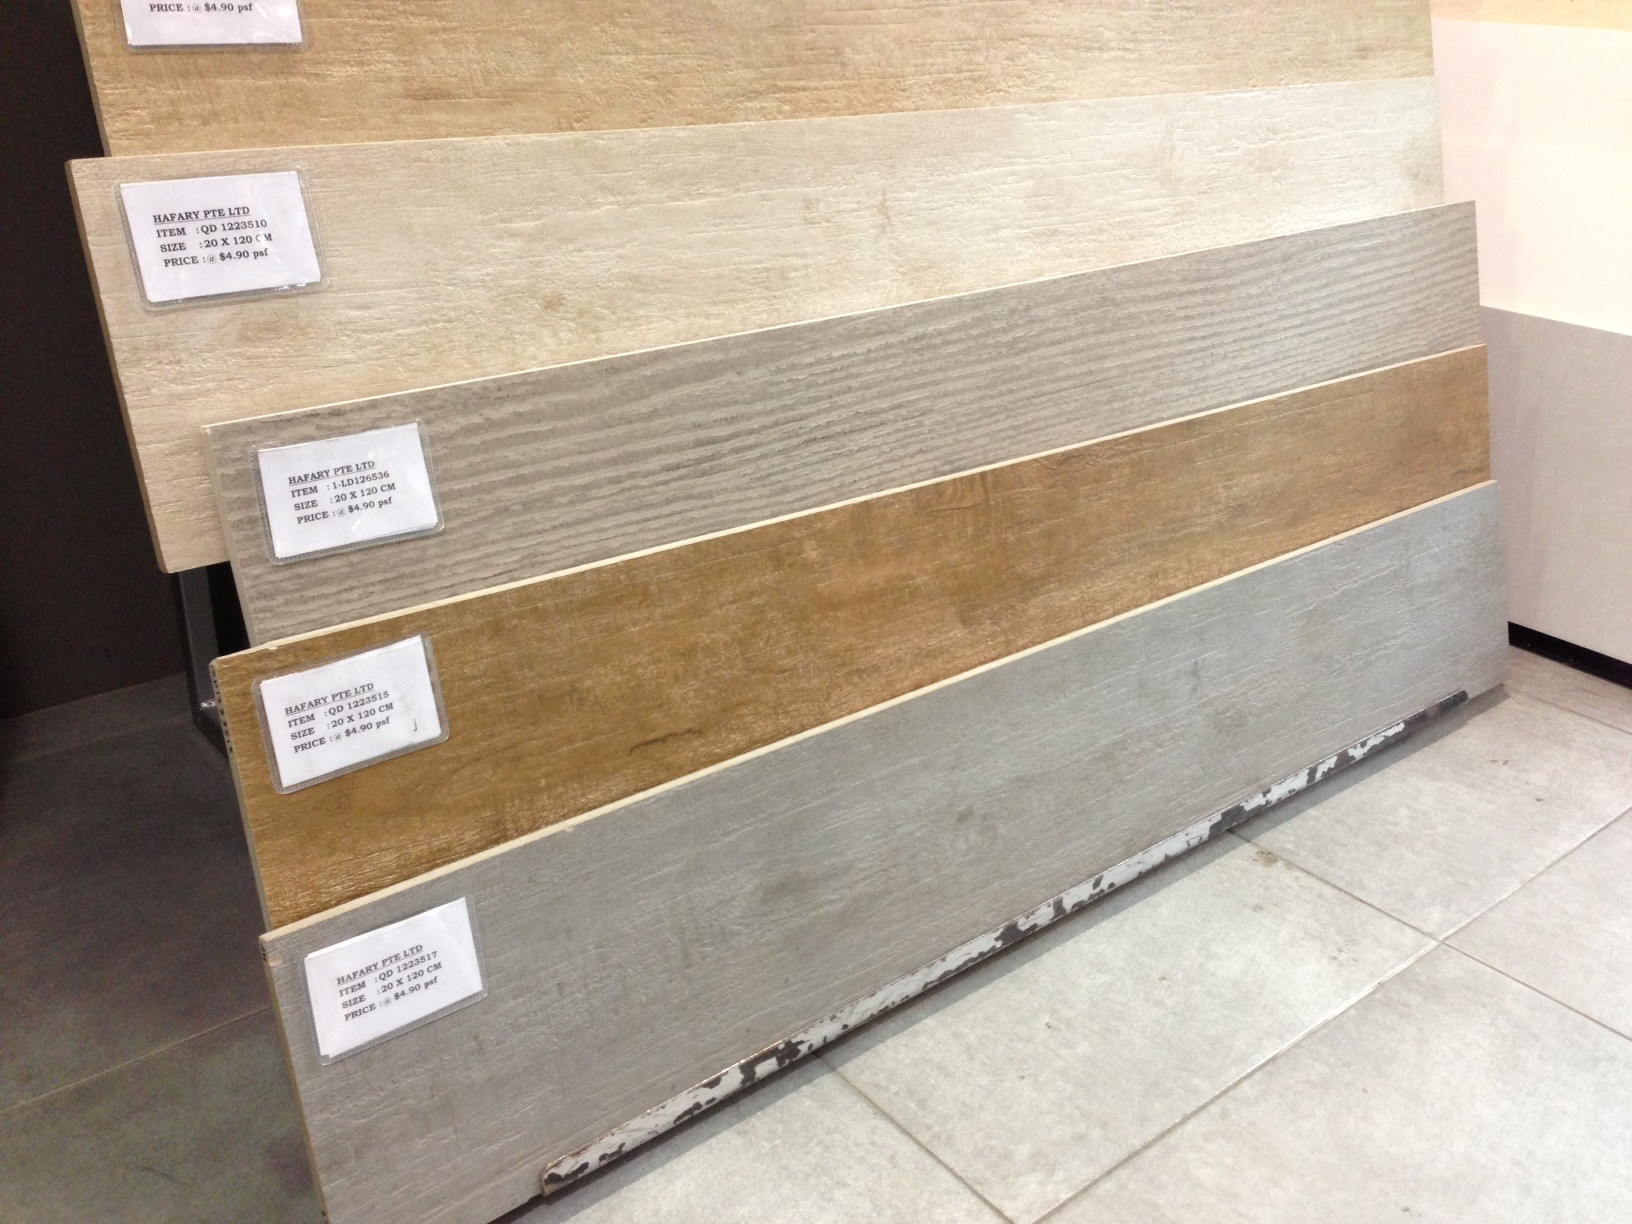 Discount Hardwood Flooring Utah Of Floor Tiles for Sale Cheap Floor Plan Ideas Intended for Floor Tiles for Sale Cheap where to Buy Floor Tiles In Singapore